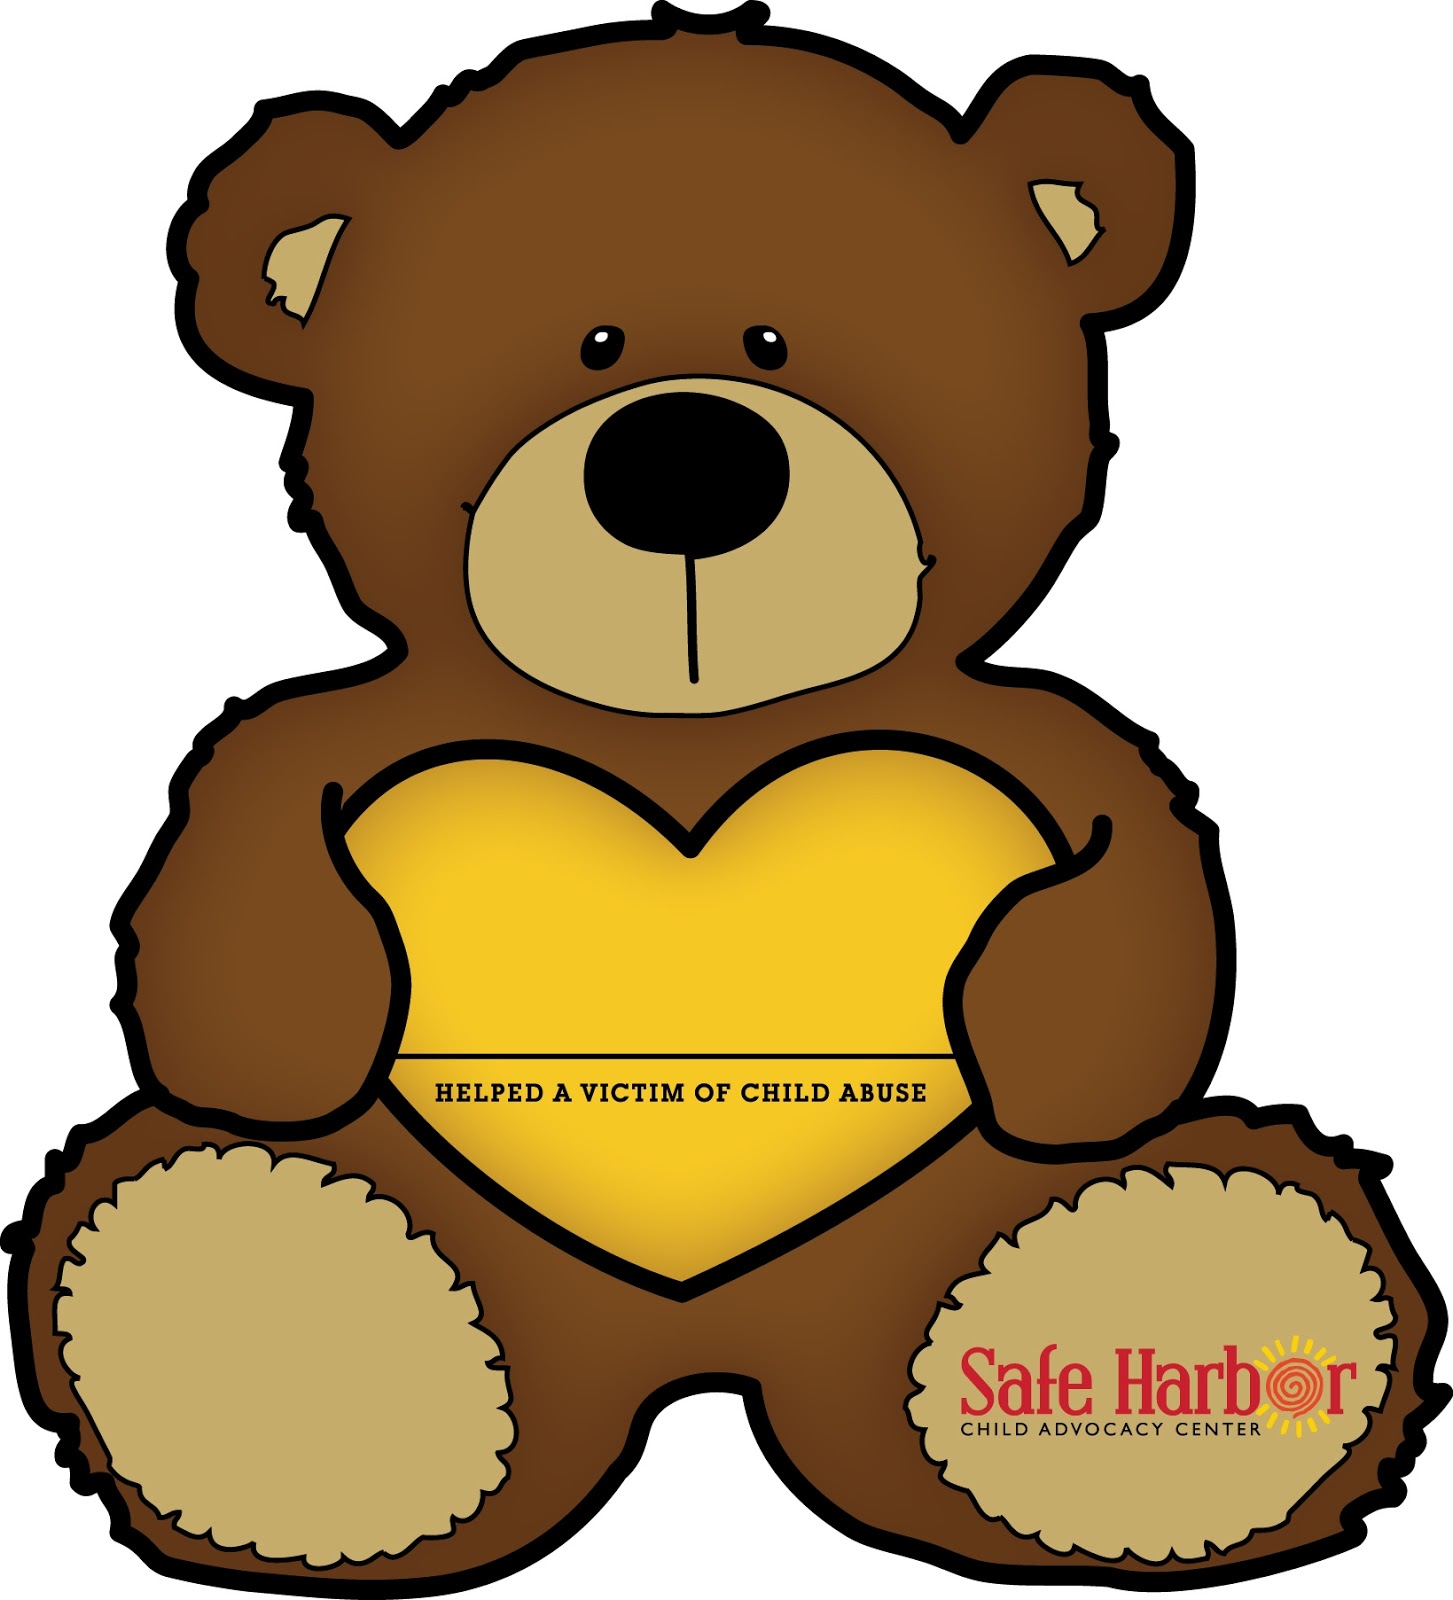 Safe Harbor Child Advocacy Center: TEDDY BEARS